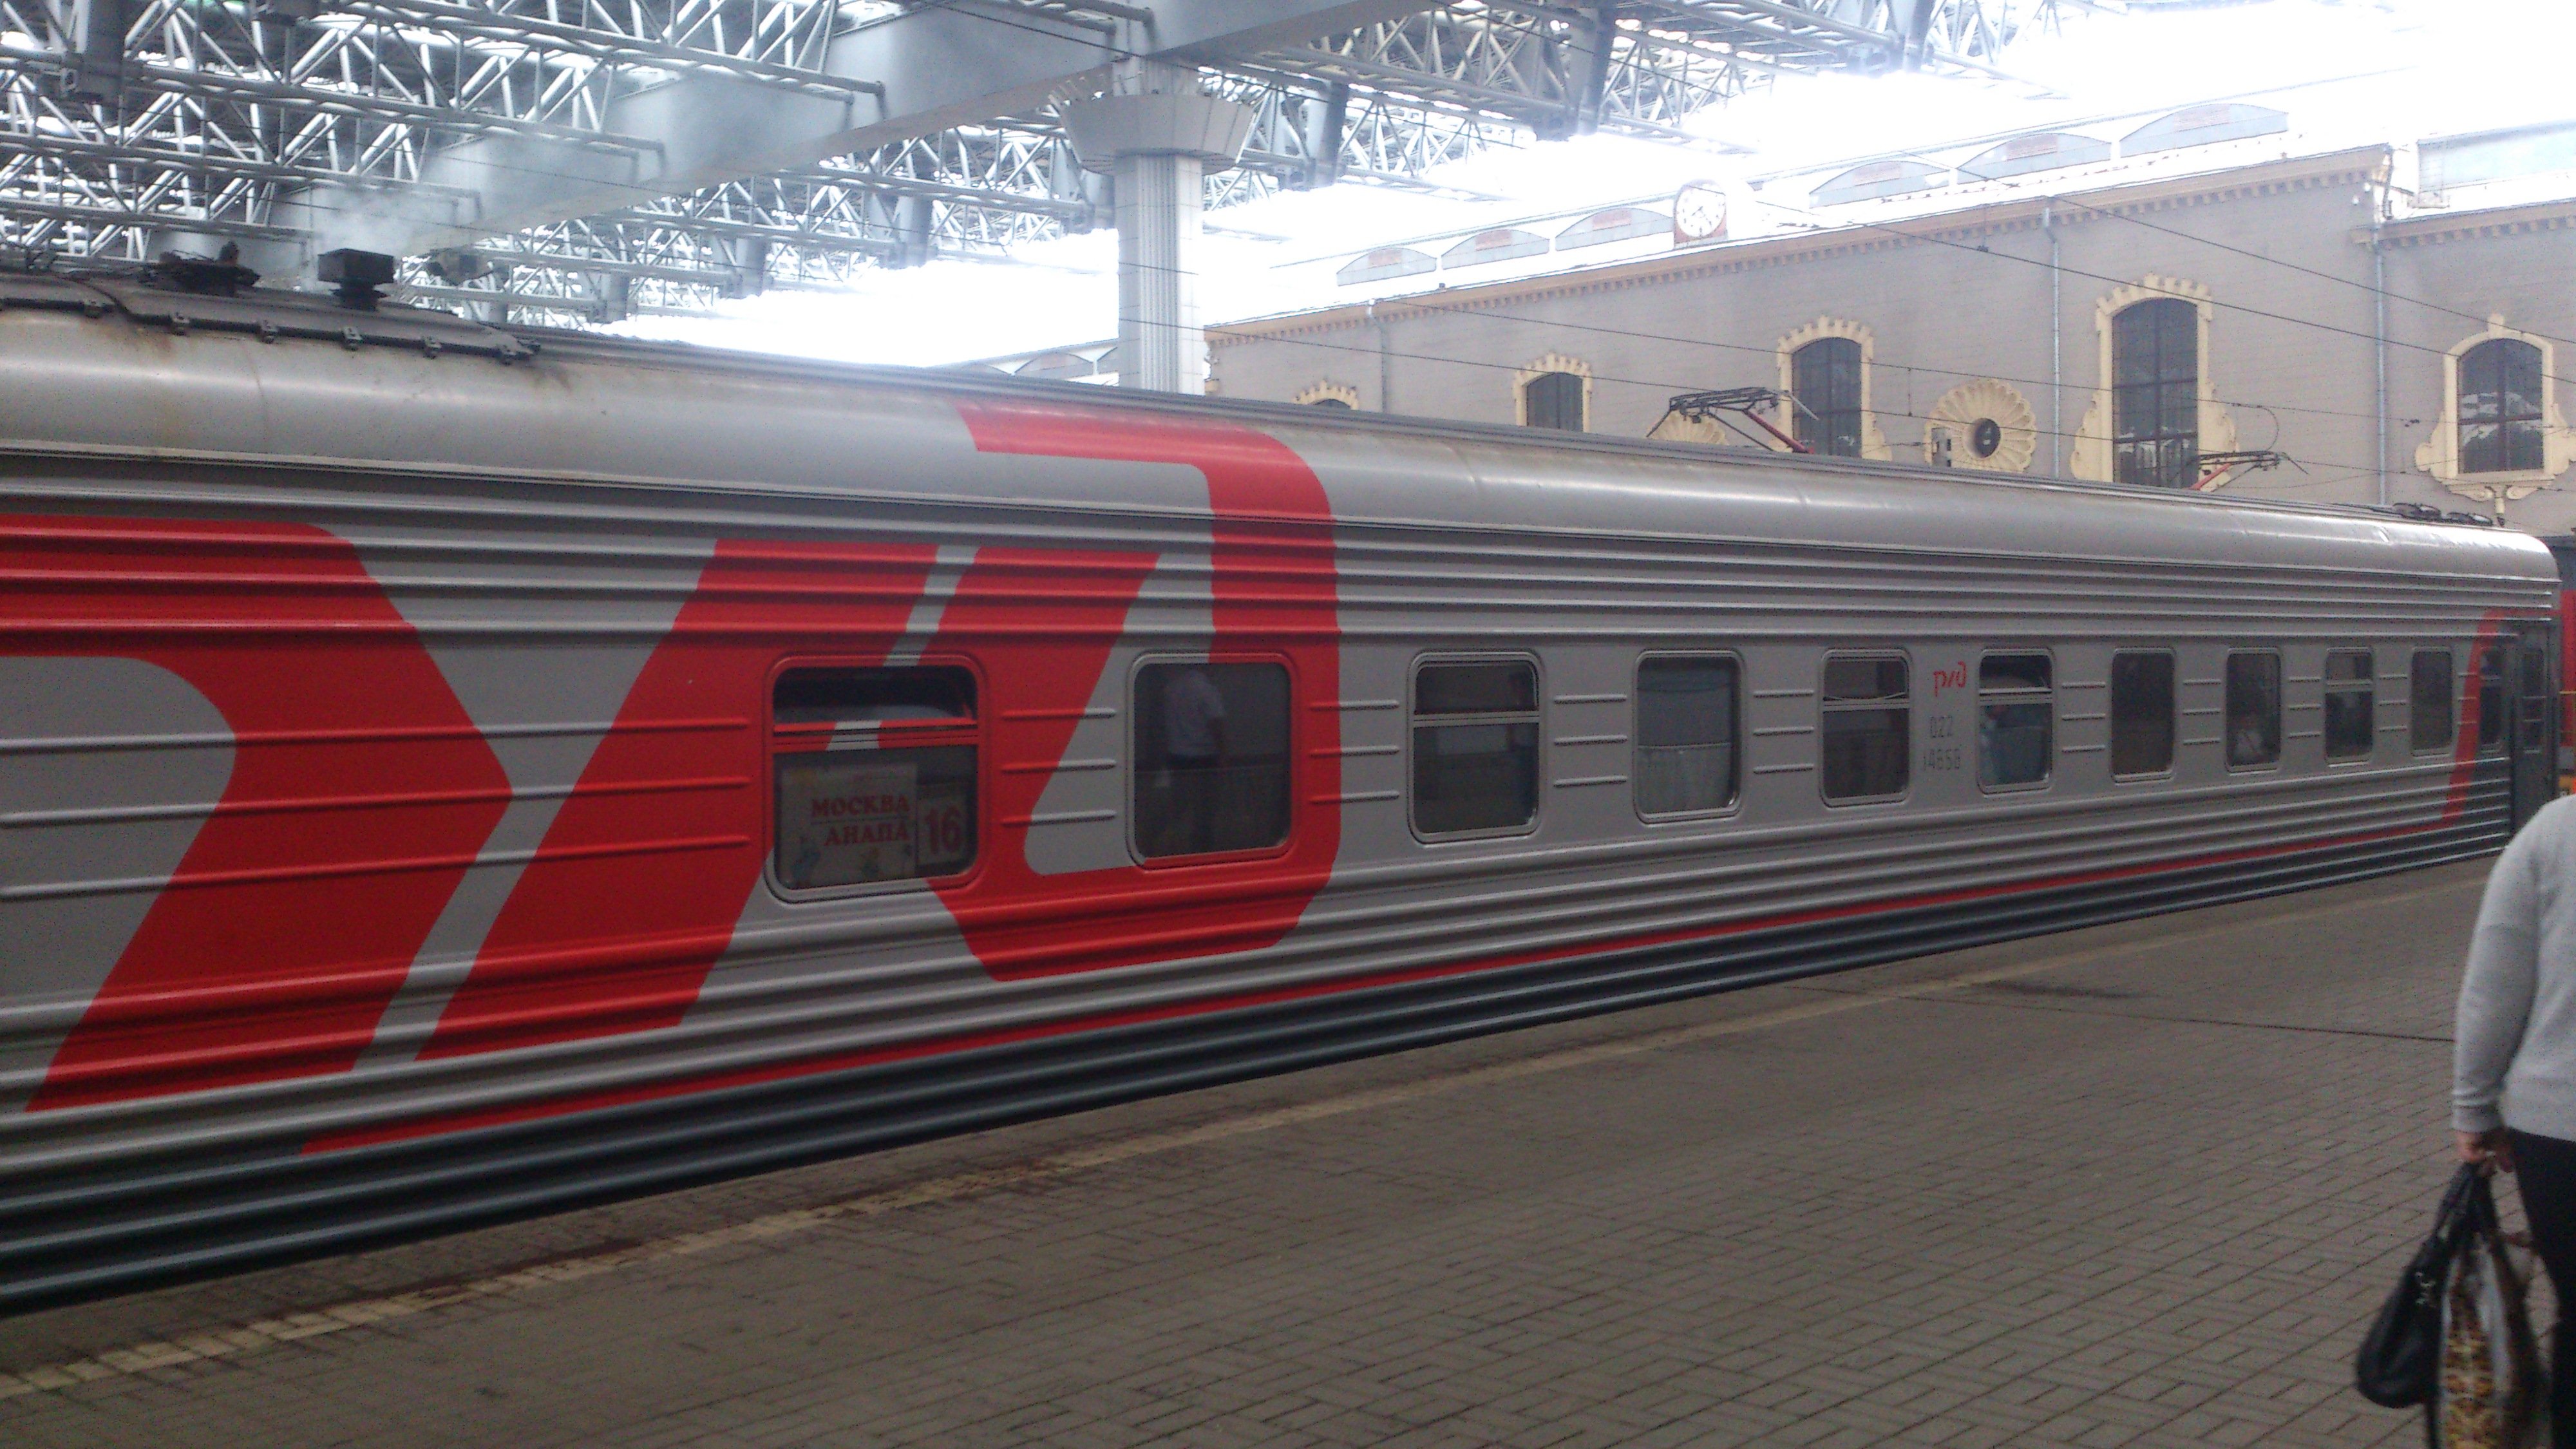 фирменный поезд москва анапа 012 плацкарт